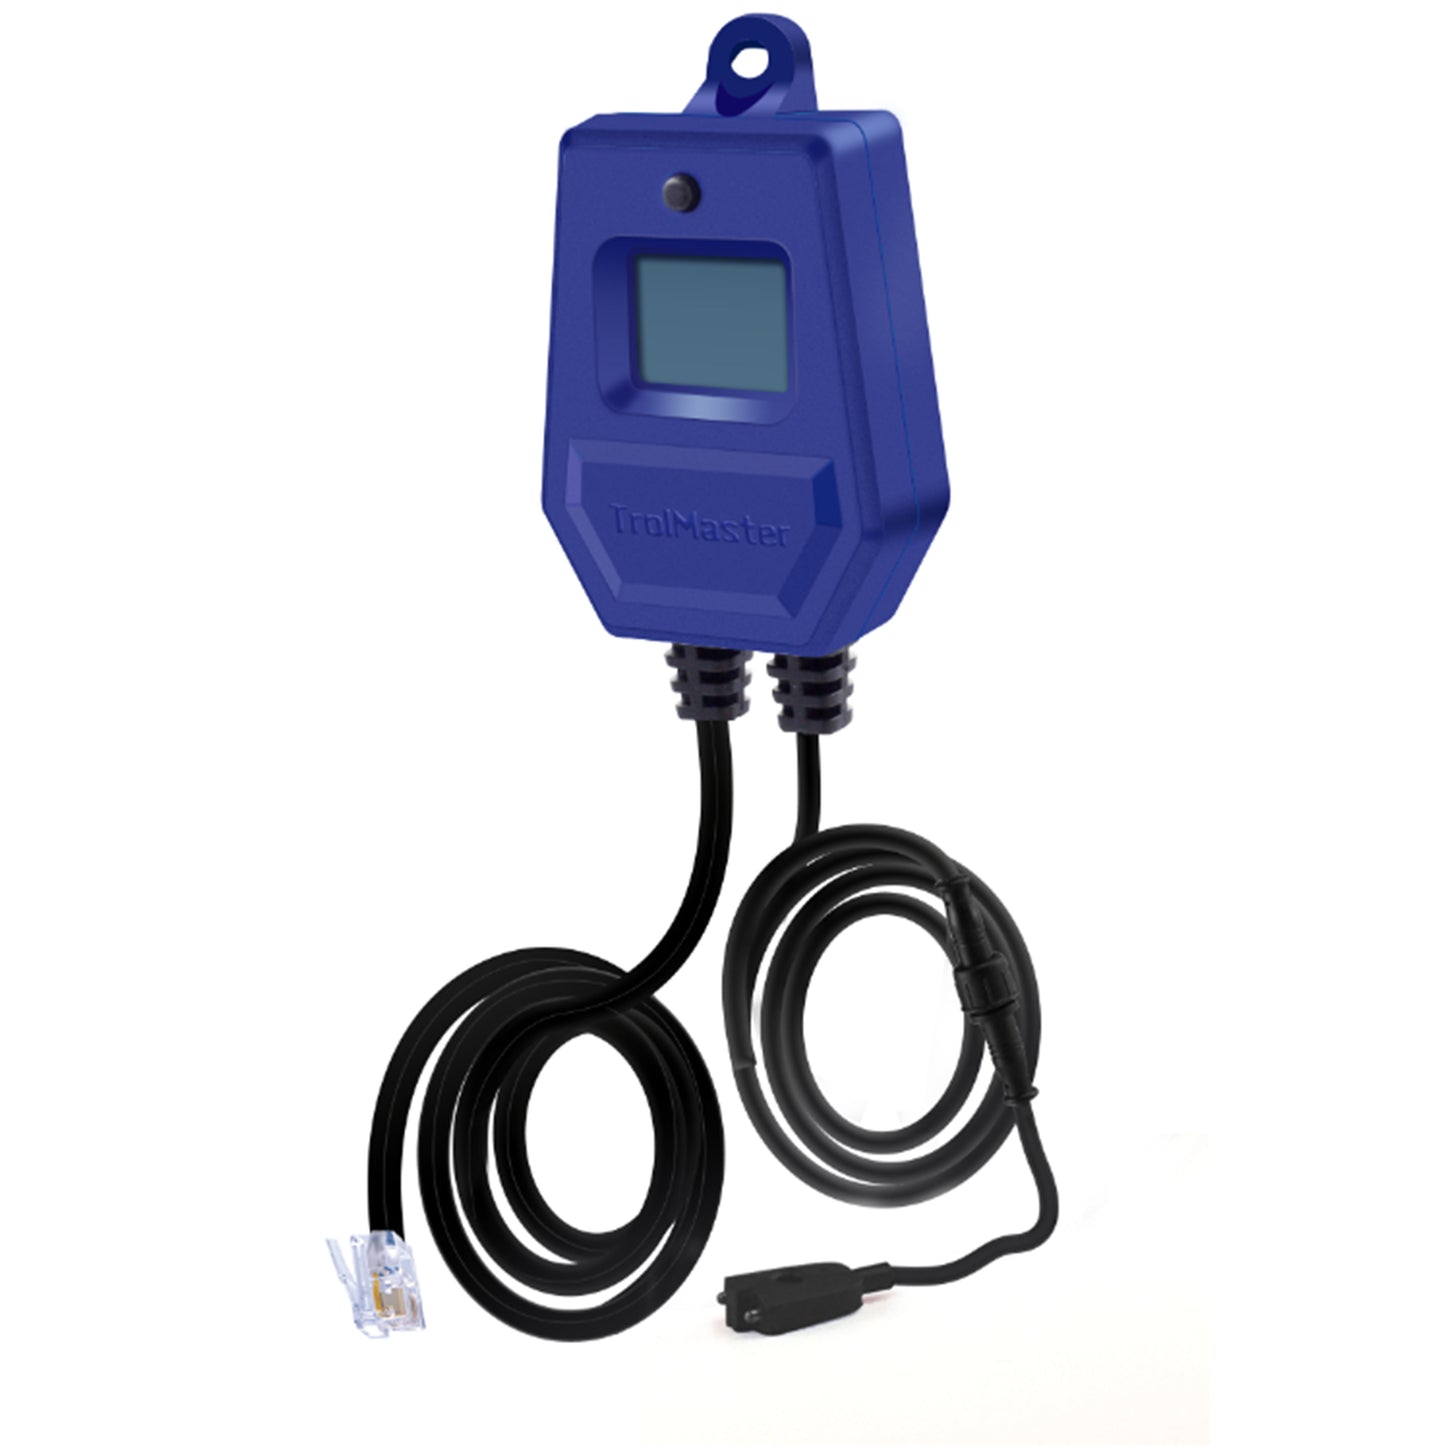 TrolMaster Aqua X Water Detector